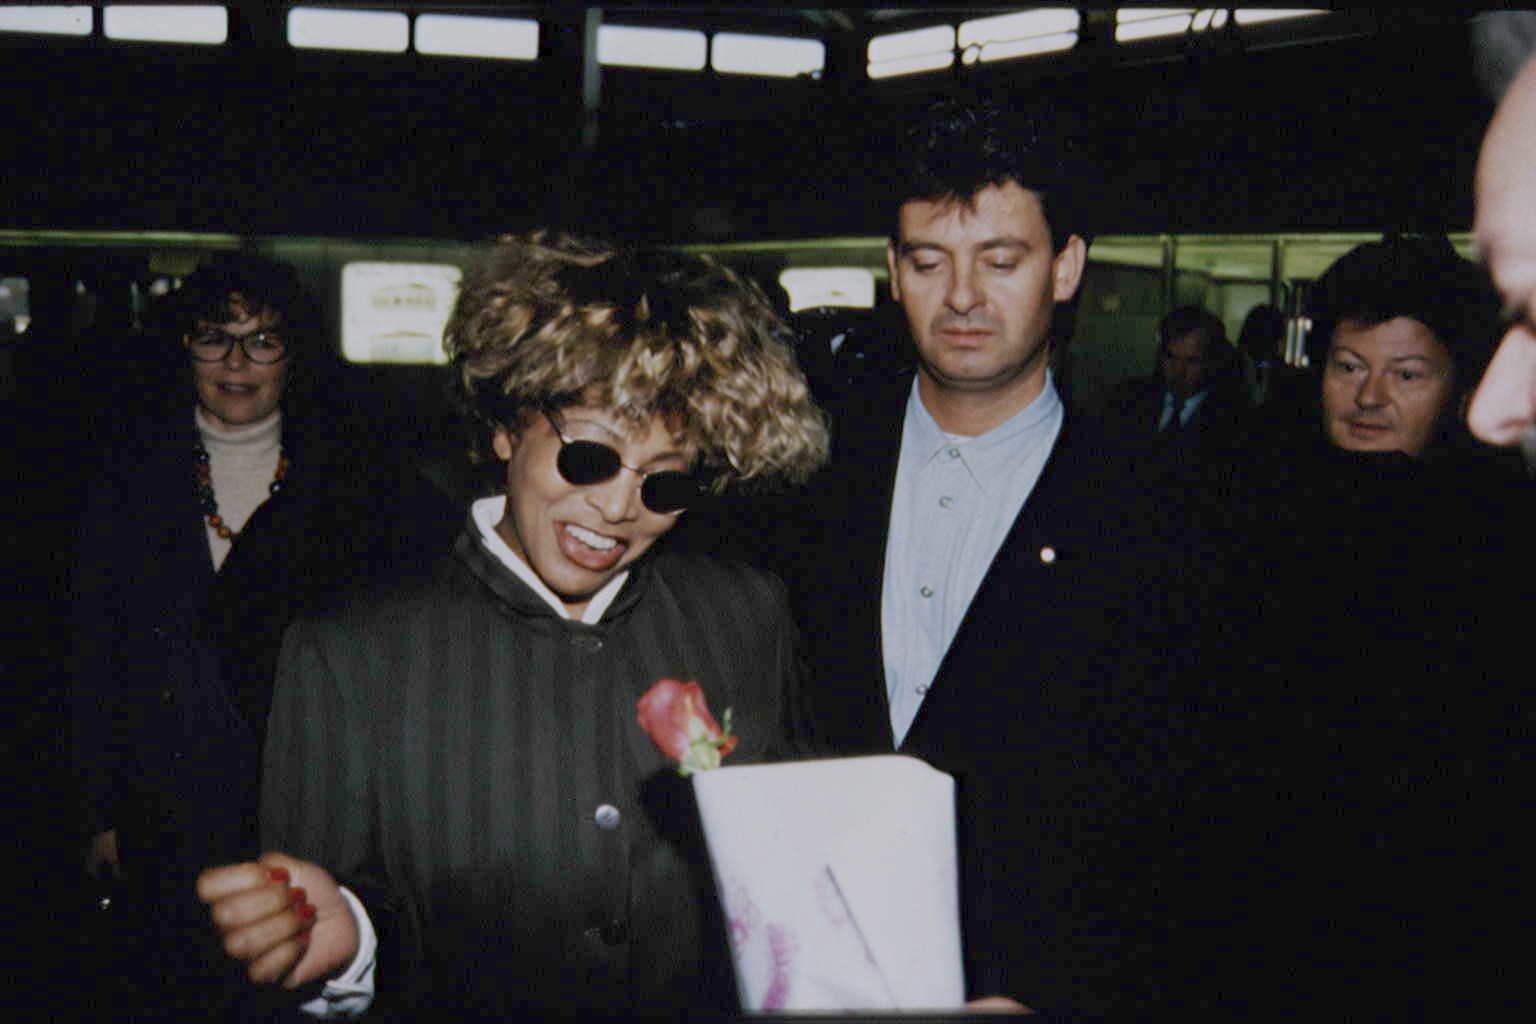 Tina Turner wearing sunglasses walking with Erwin Bach